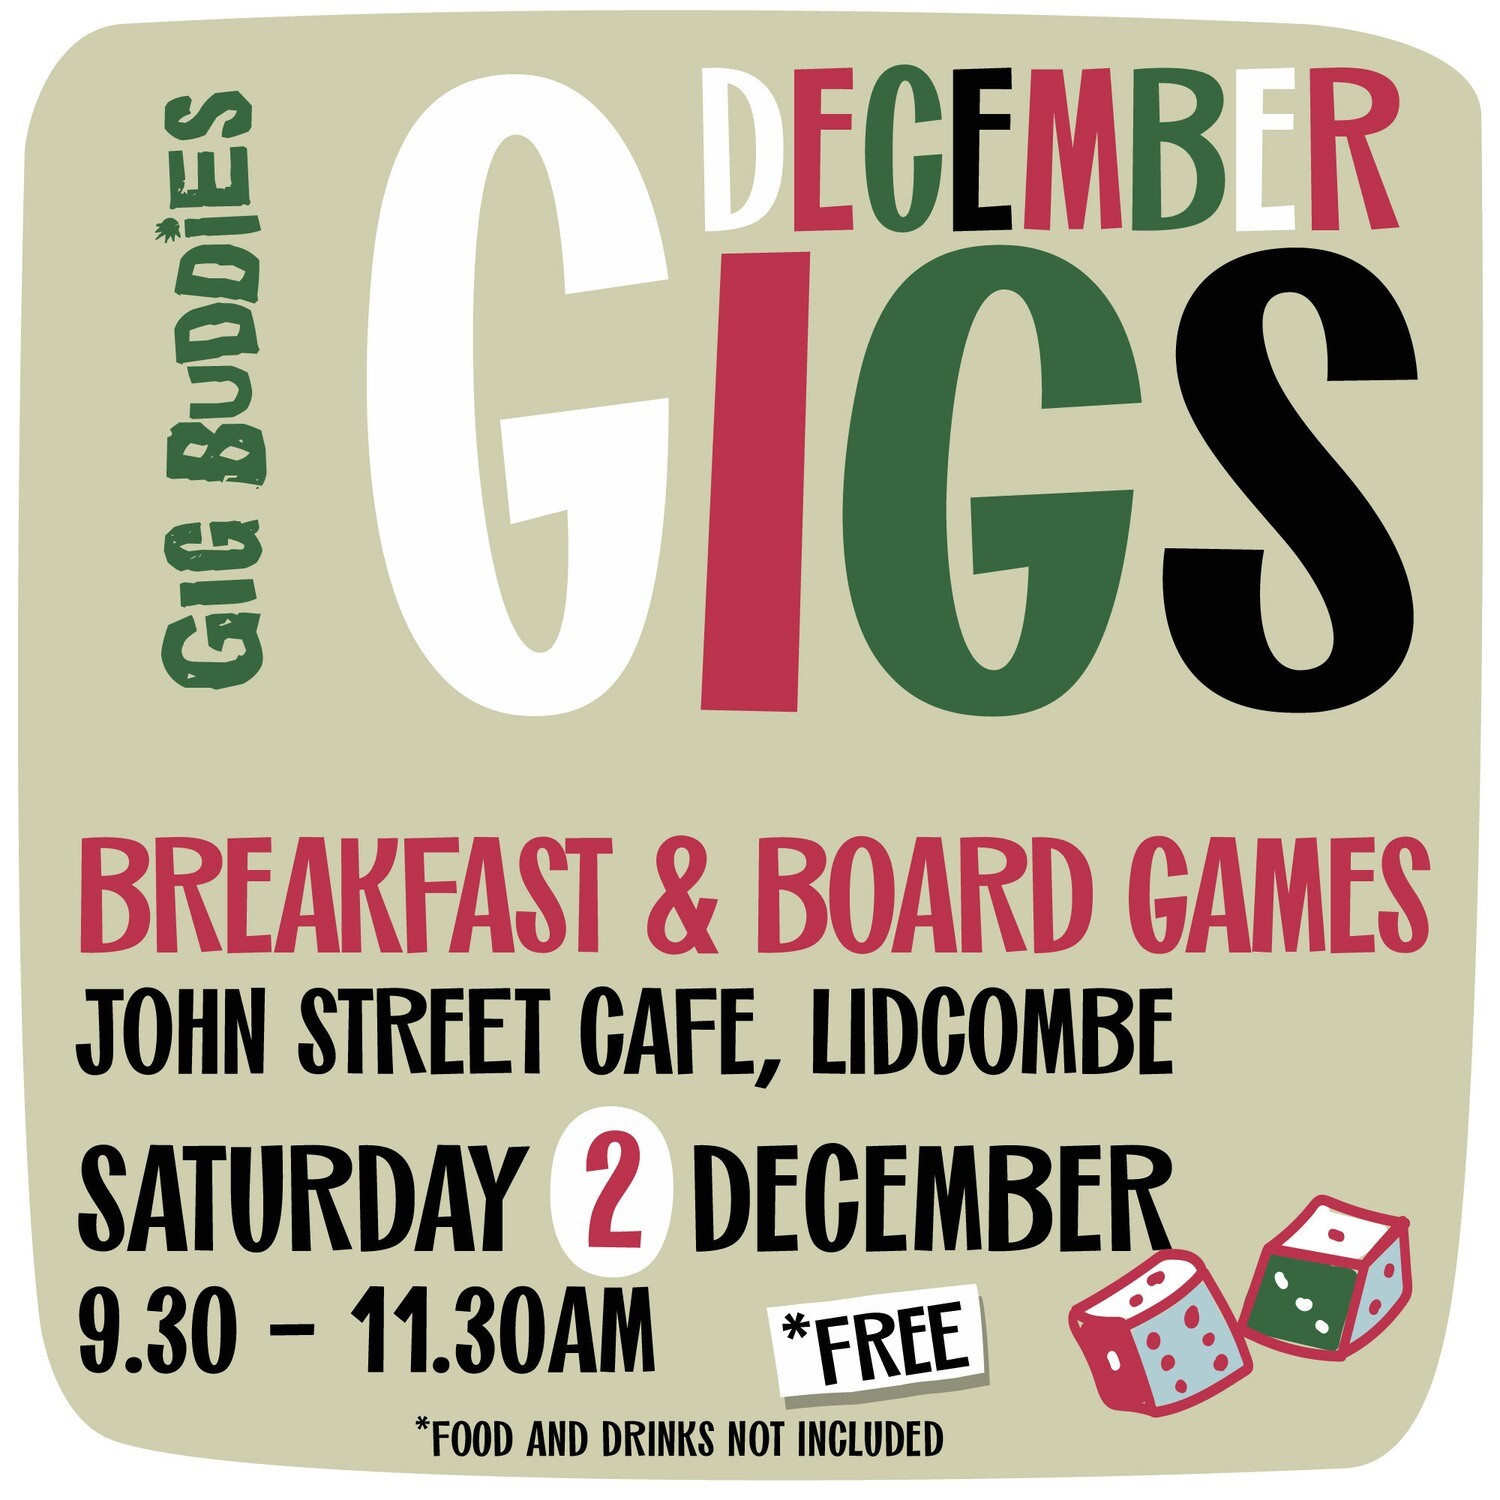 Breakfast and Board Games @ John Street Cafe, Lidcombe - Saturday 2 December